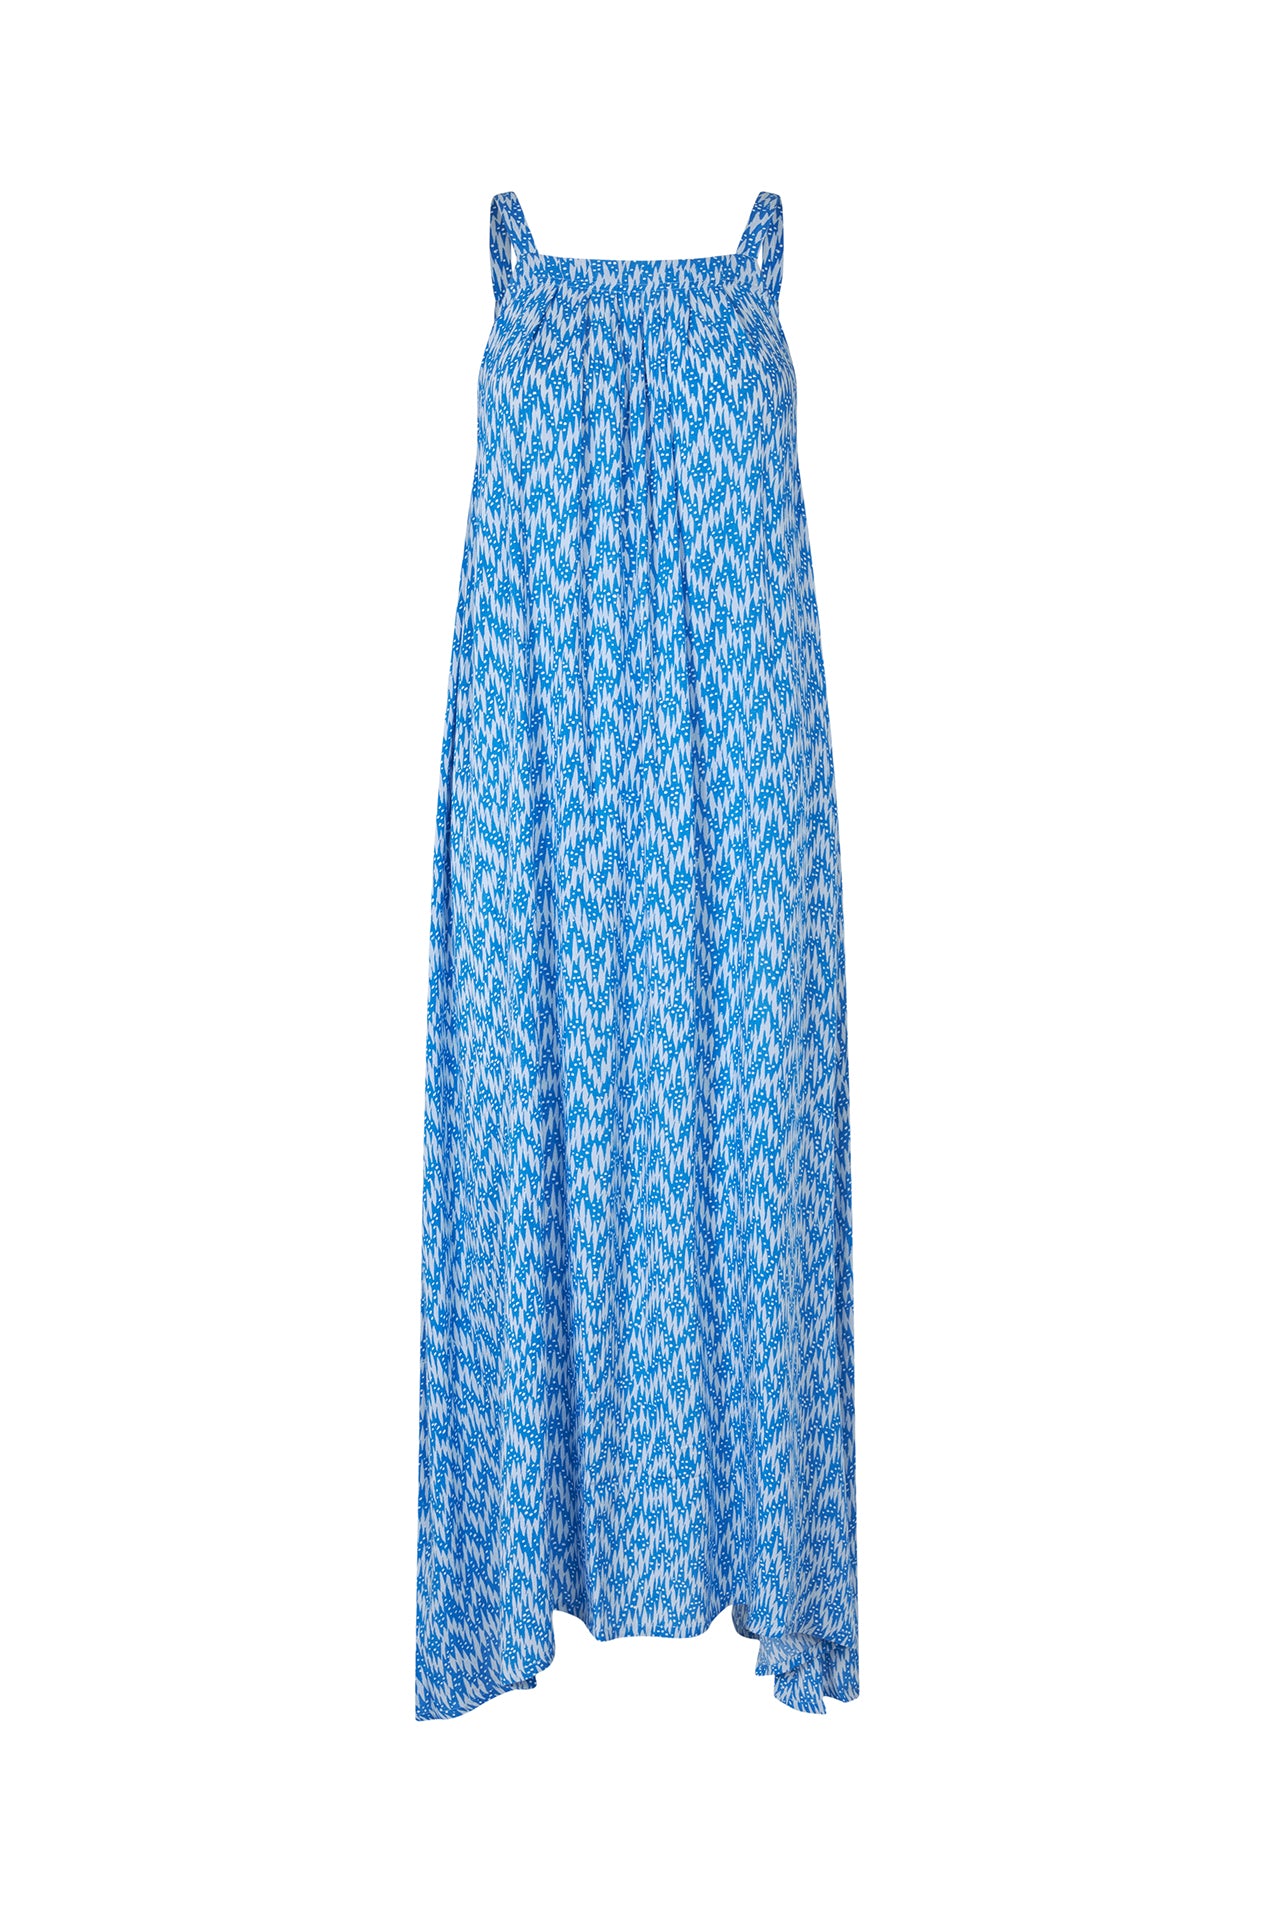 Lollys Laundry LungoLL Dress SL Dress 20 Blue